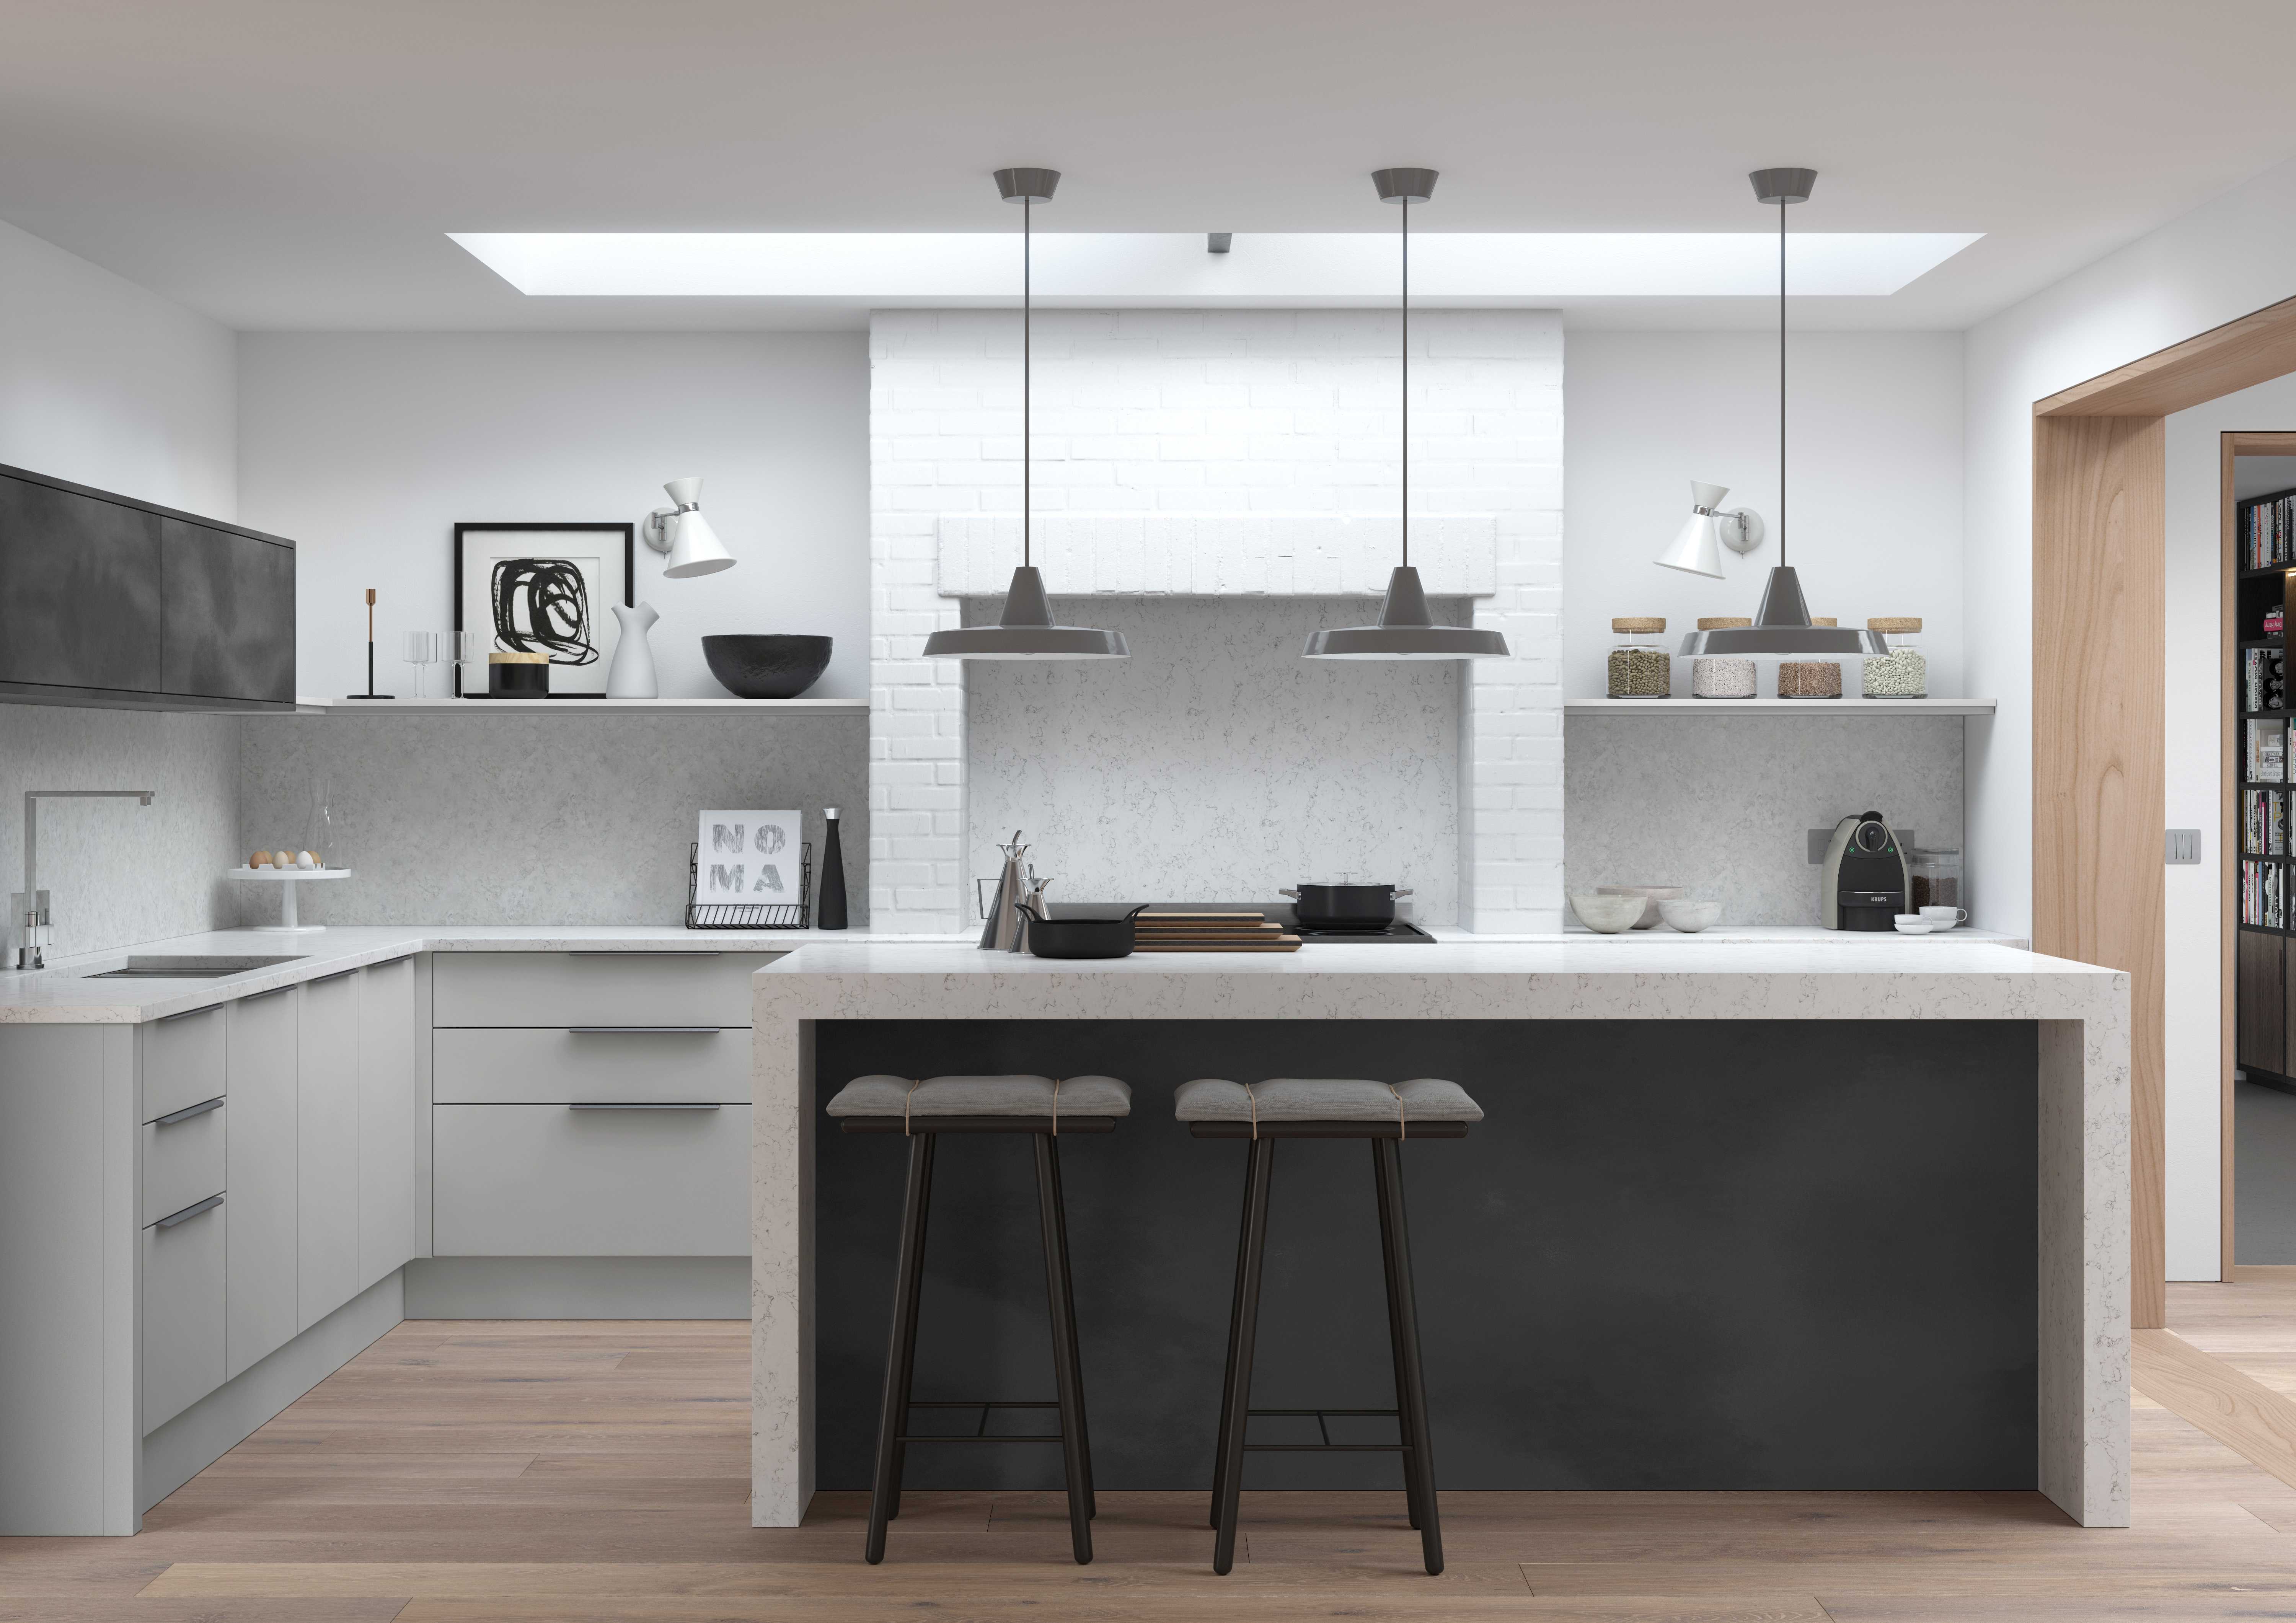 Matt light grey modern style kitchen with black steel look kitchen island